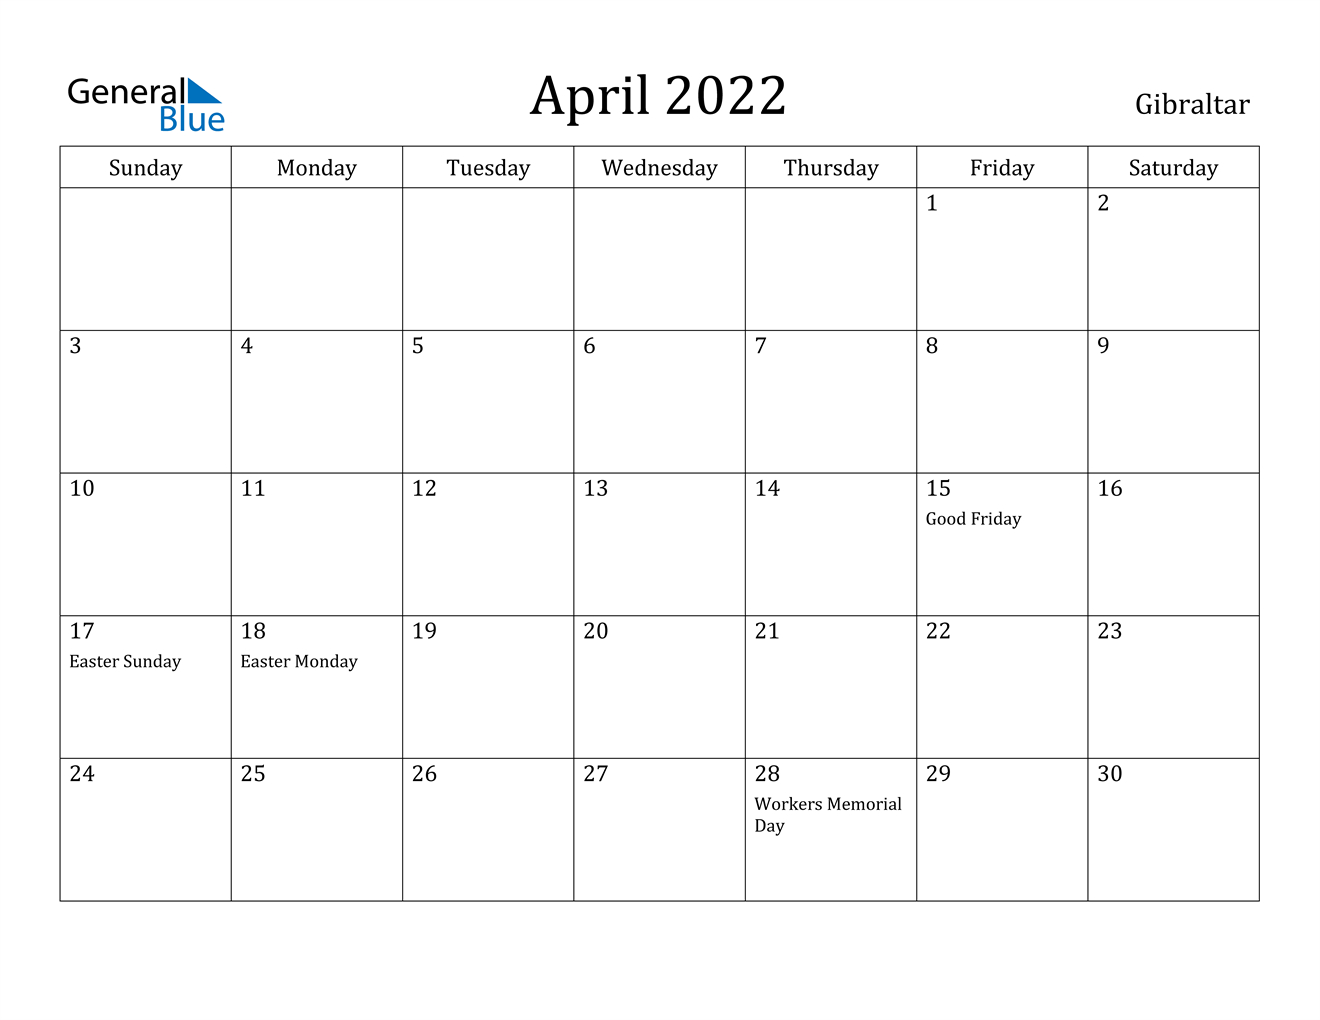 April 2022 Calendar - Gibraltar